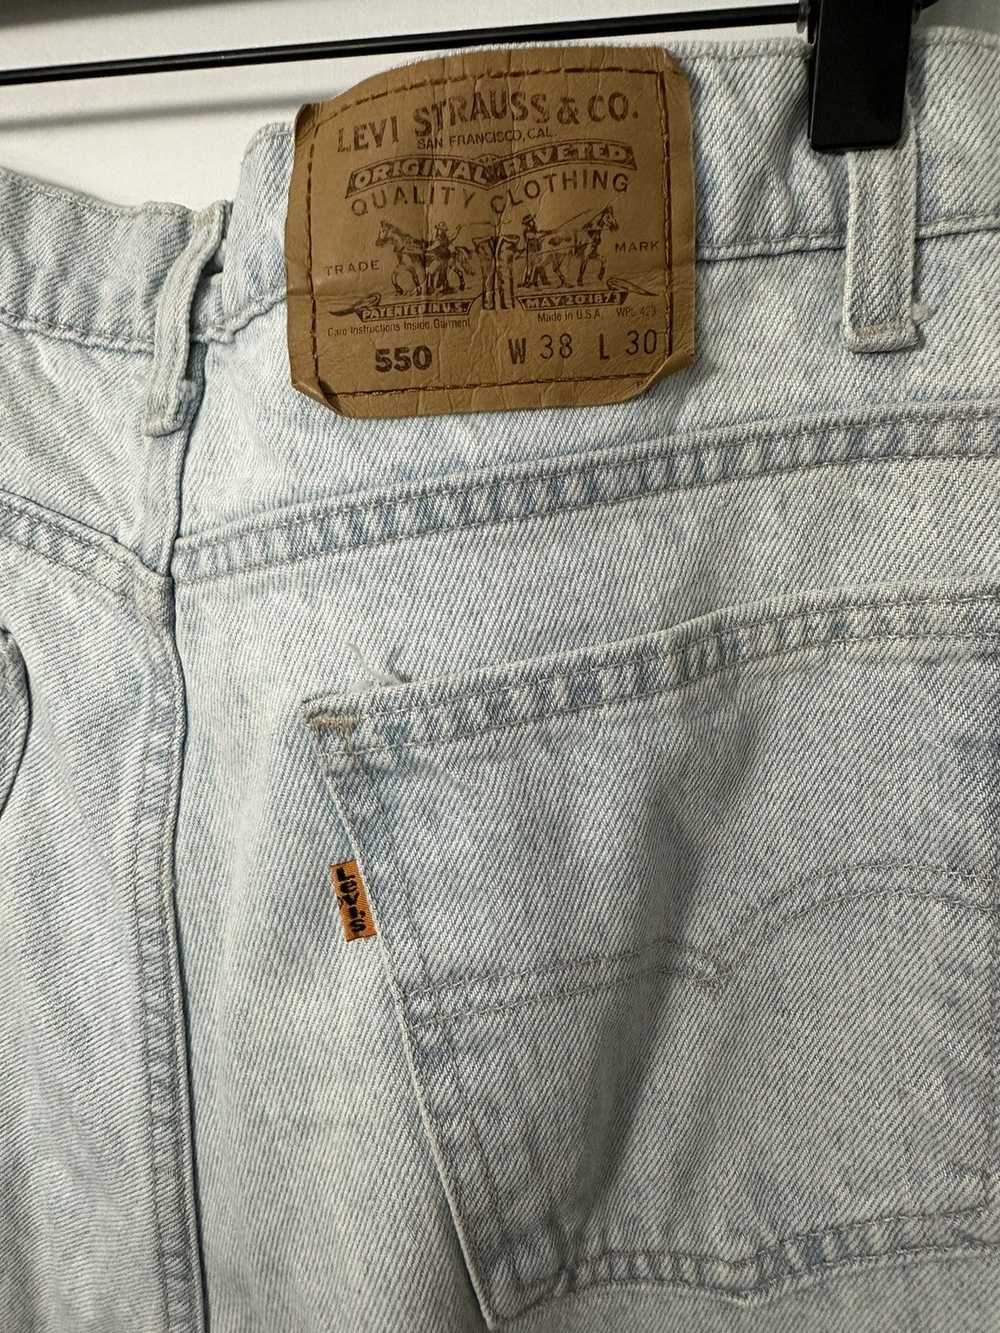 Levi's Orange tab early 90s jeans - image 3